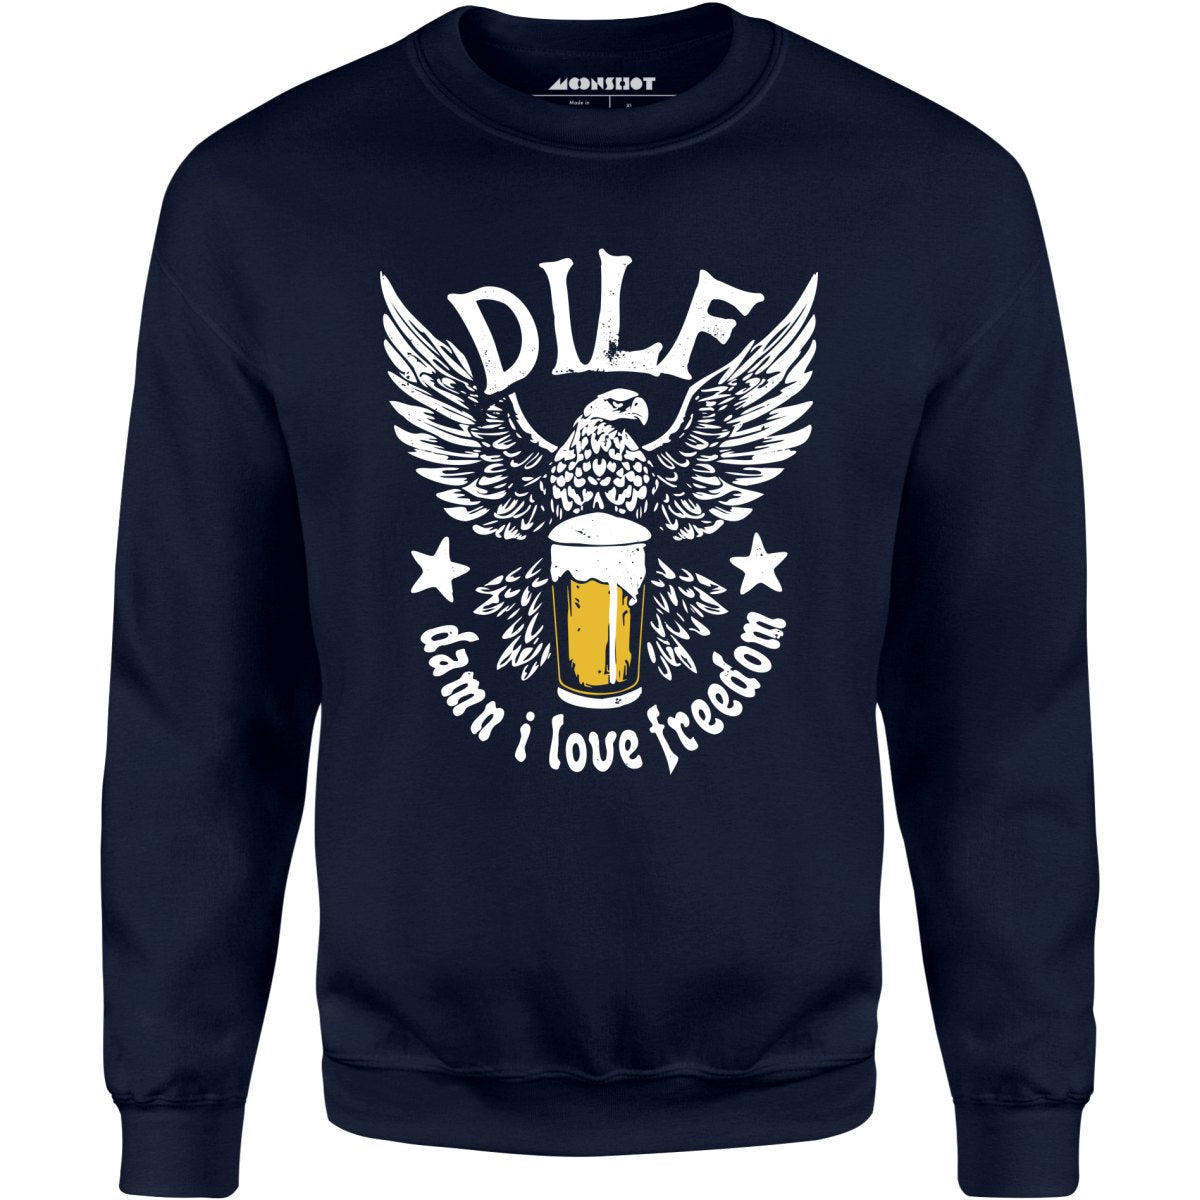 DILF - Damn I Love Freedom - Unisex Sweatshirt